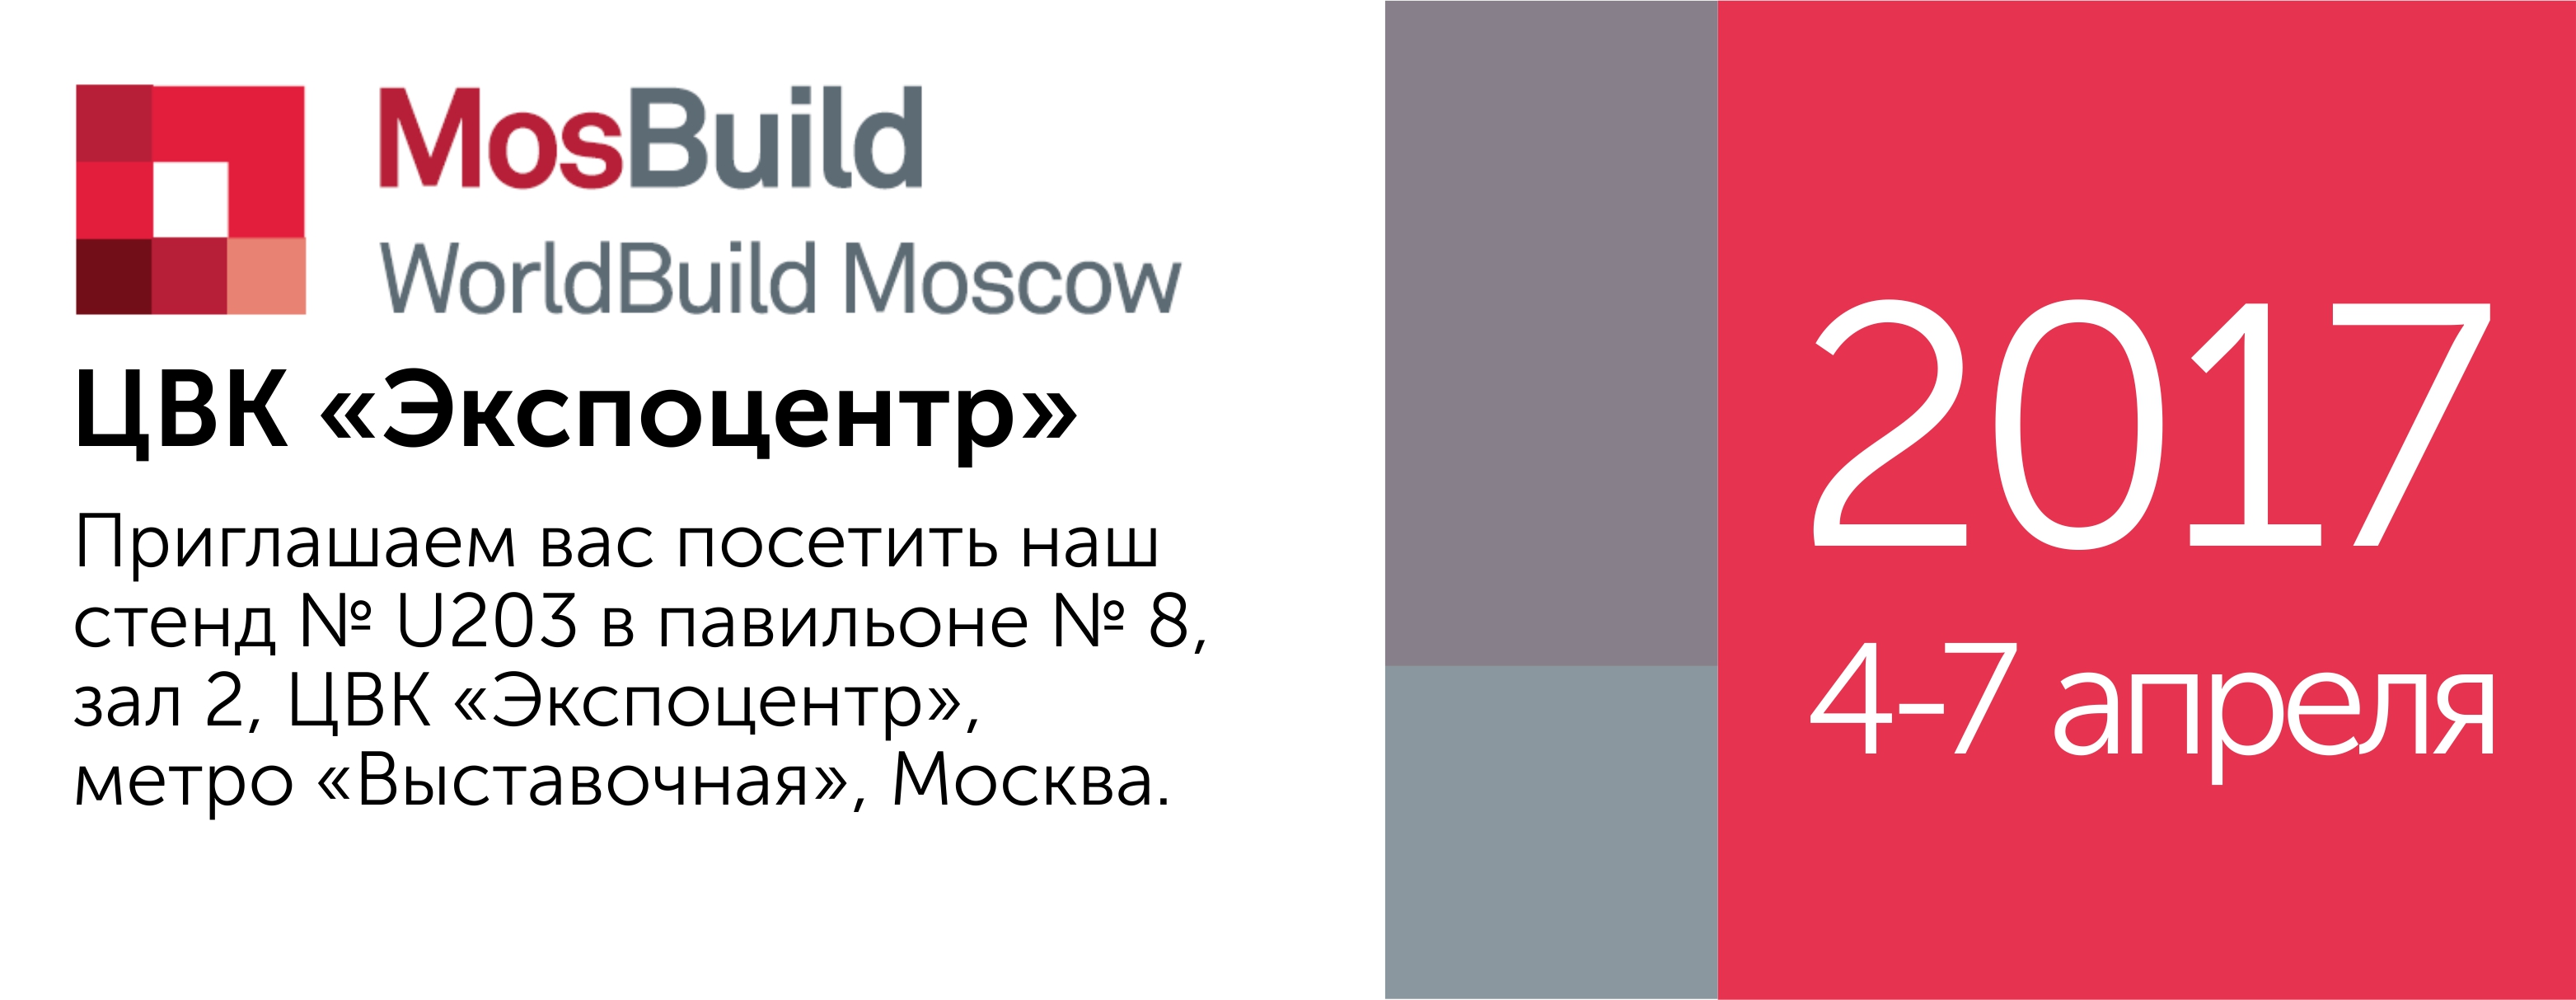 MosBuild/WorldBuild Moscow 2017